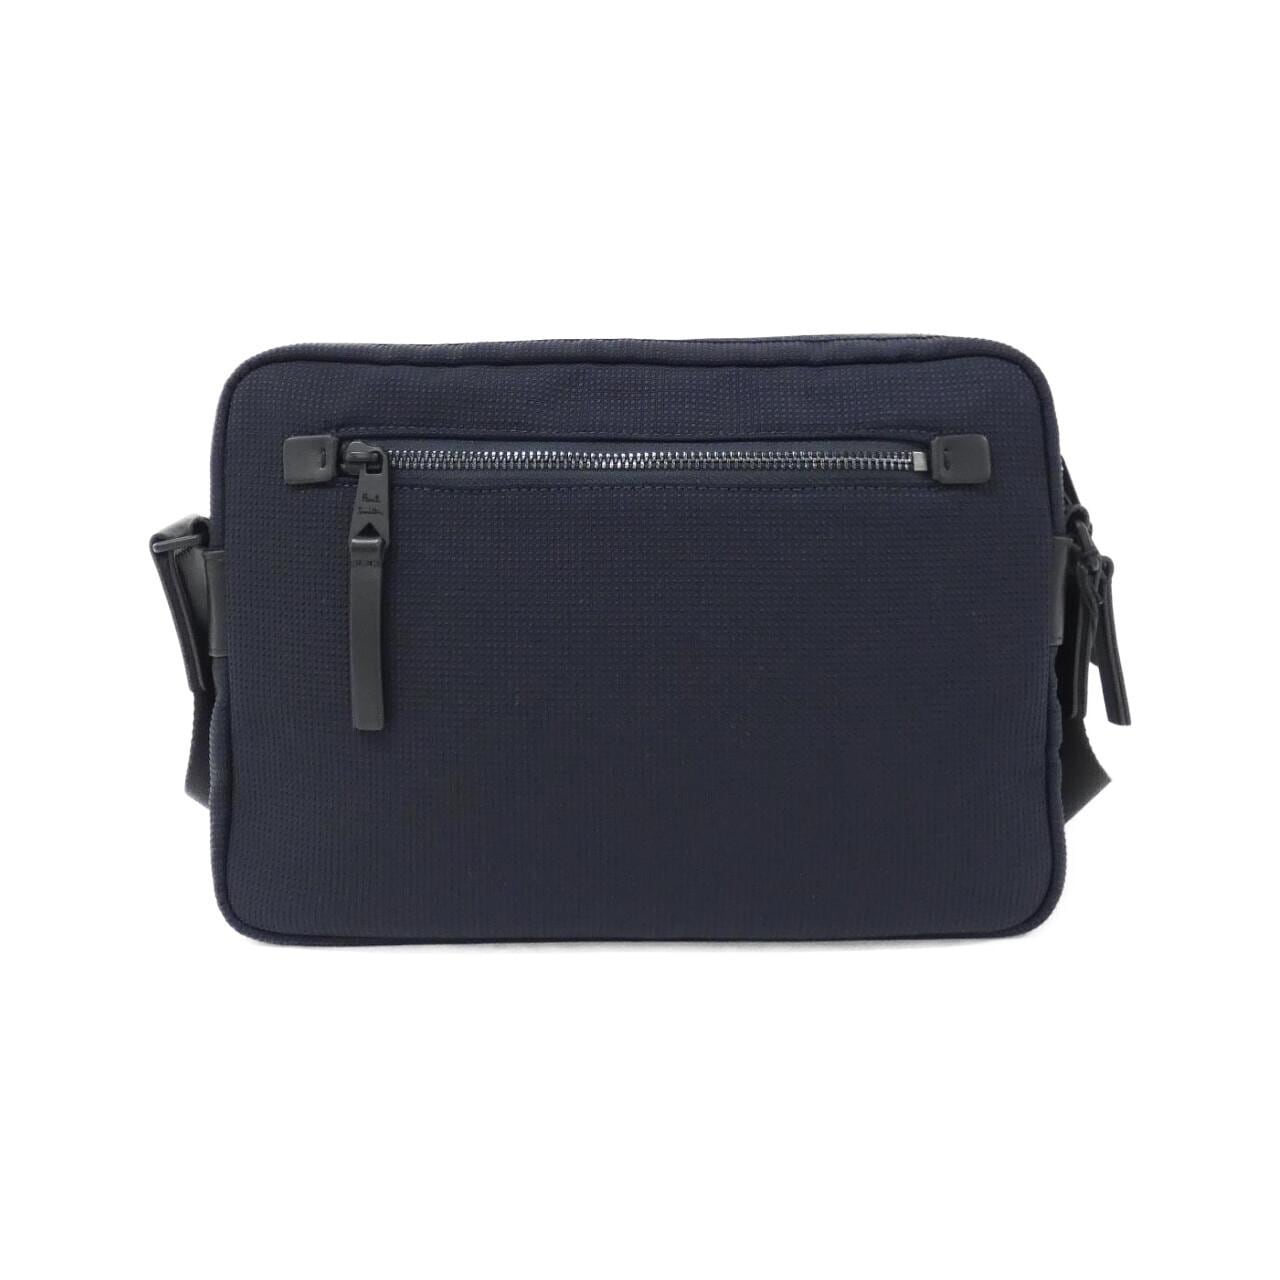 [BRAND NEW] Paul Smith 7468 Shoulder Bag